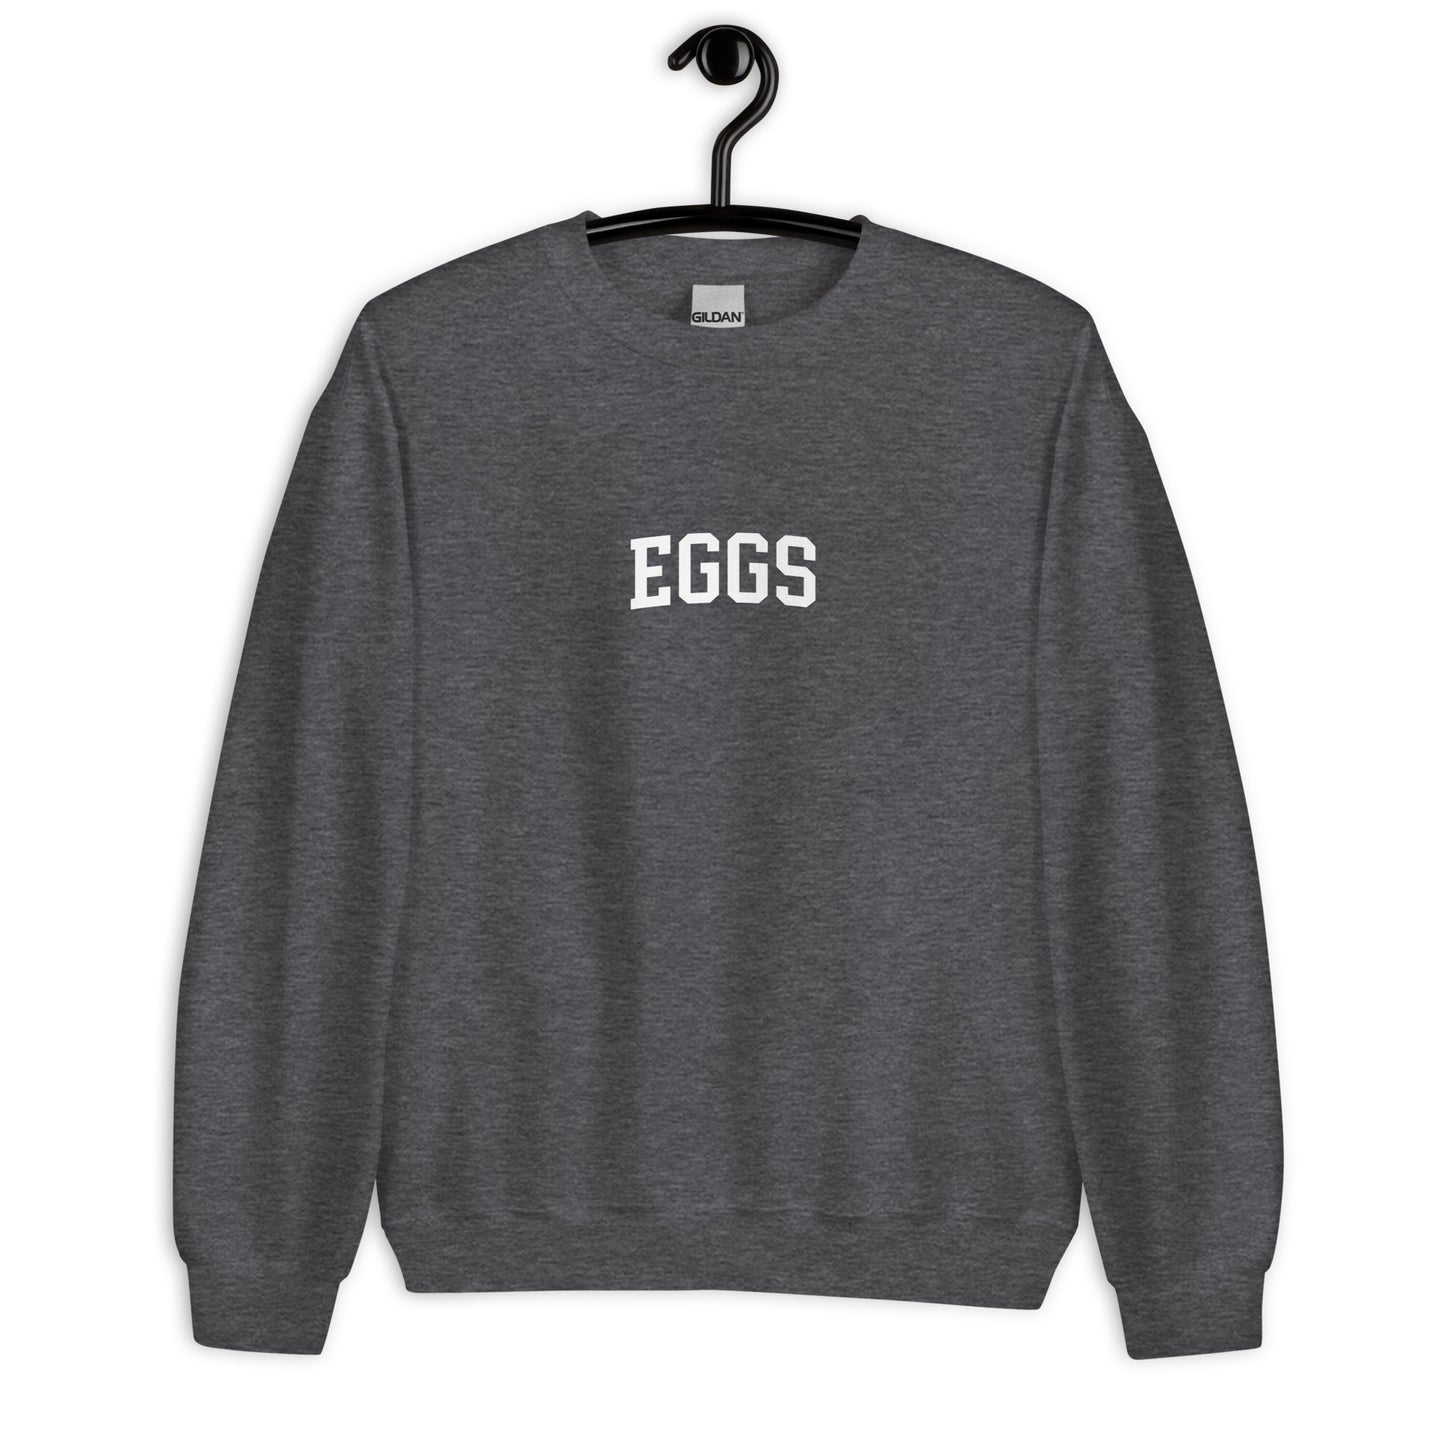 Eggs Sweatshirt - Arched Font